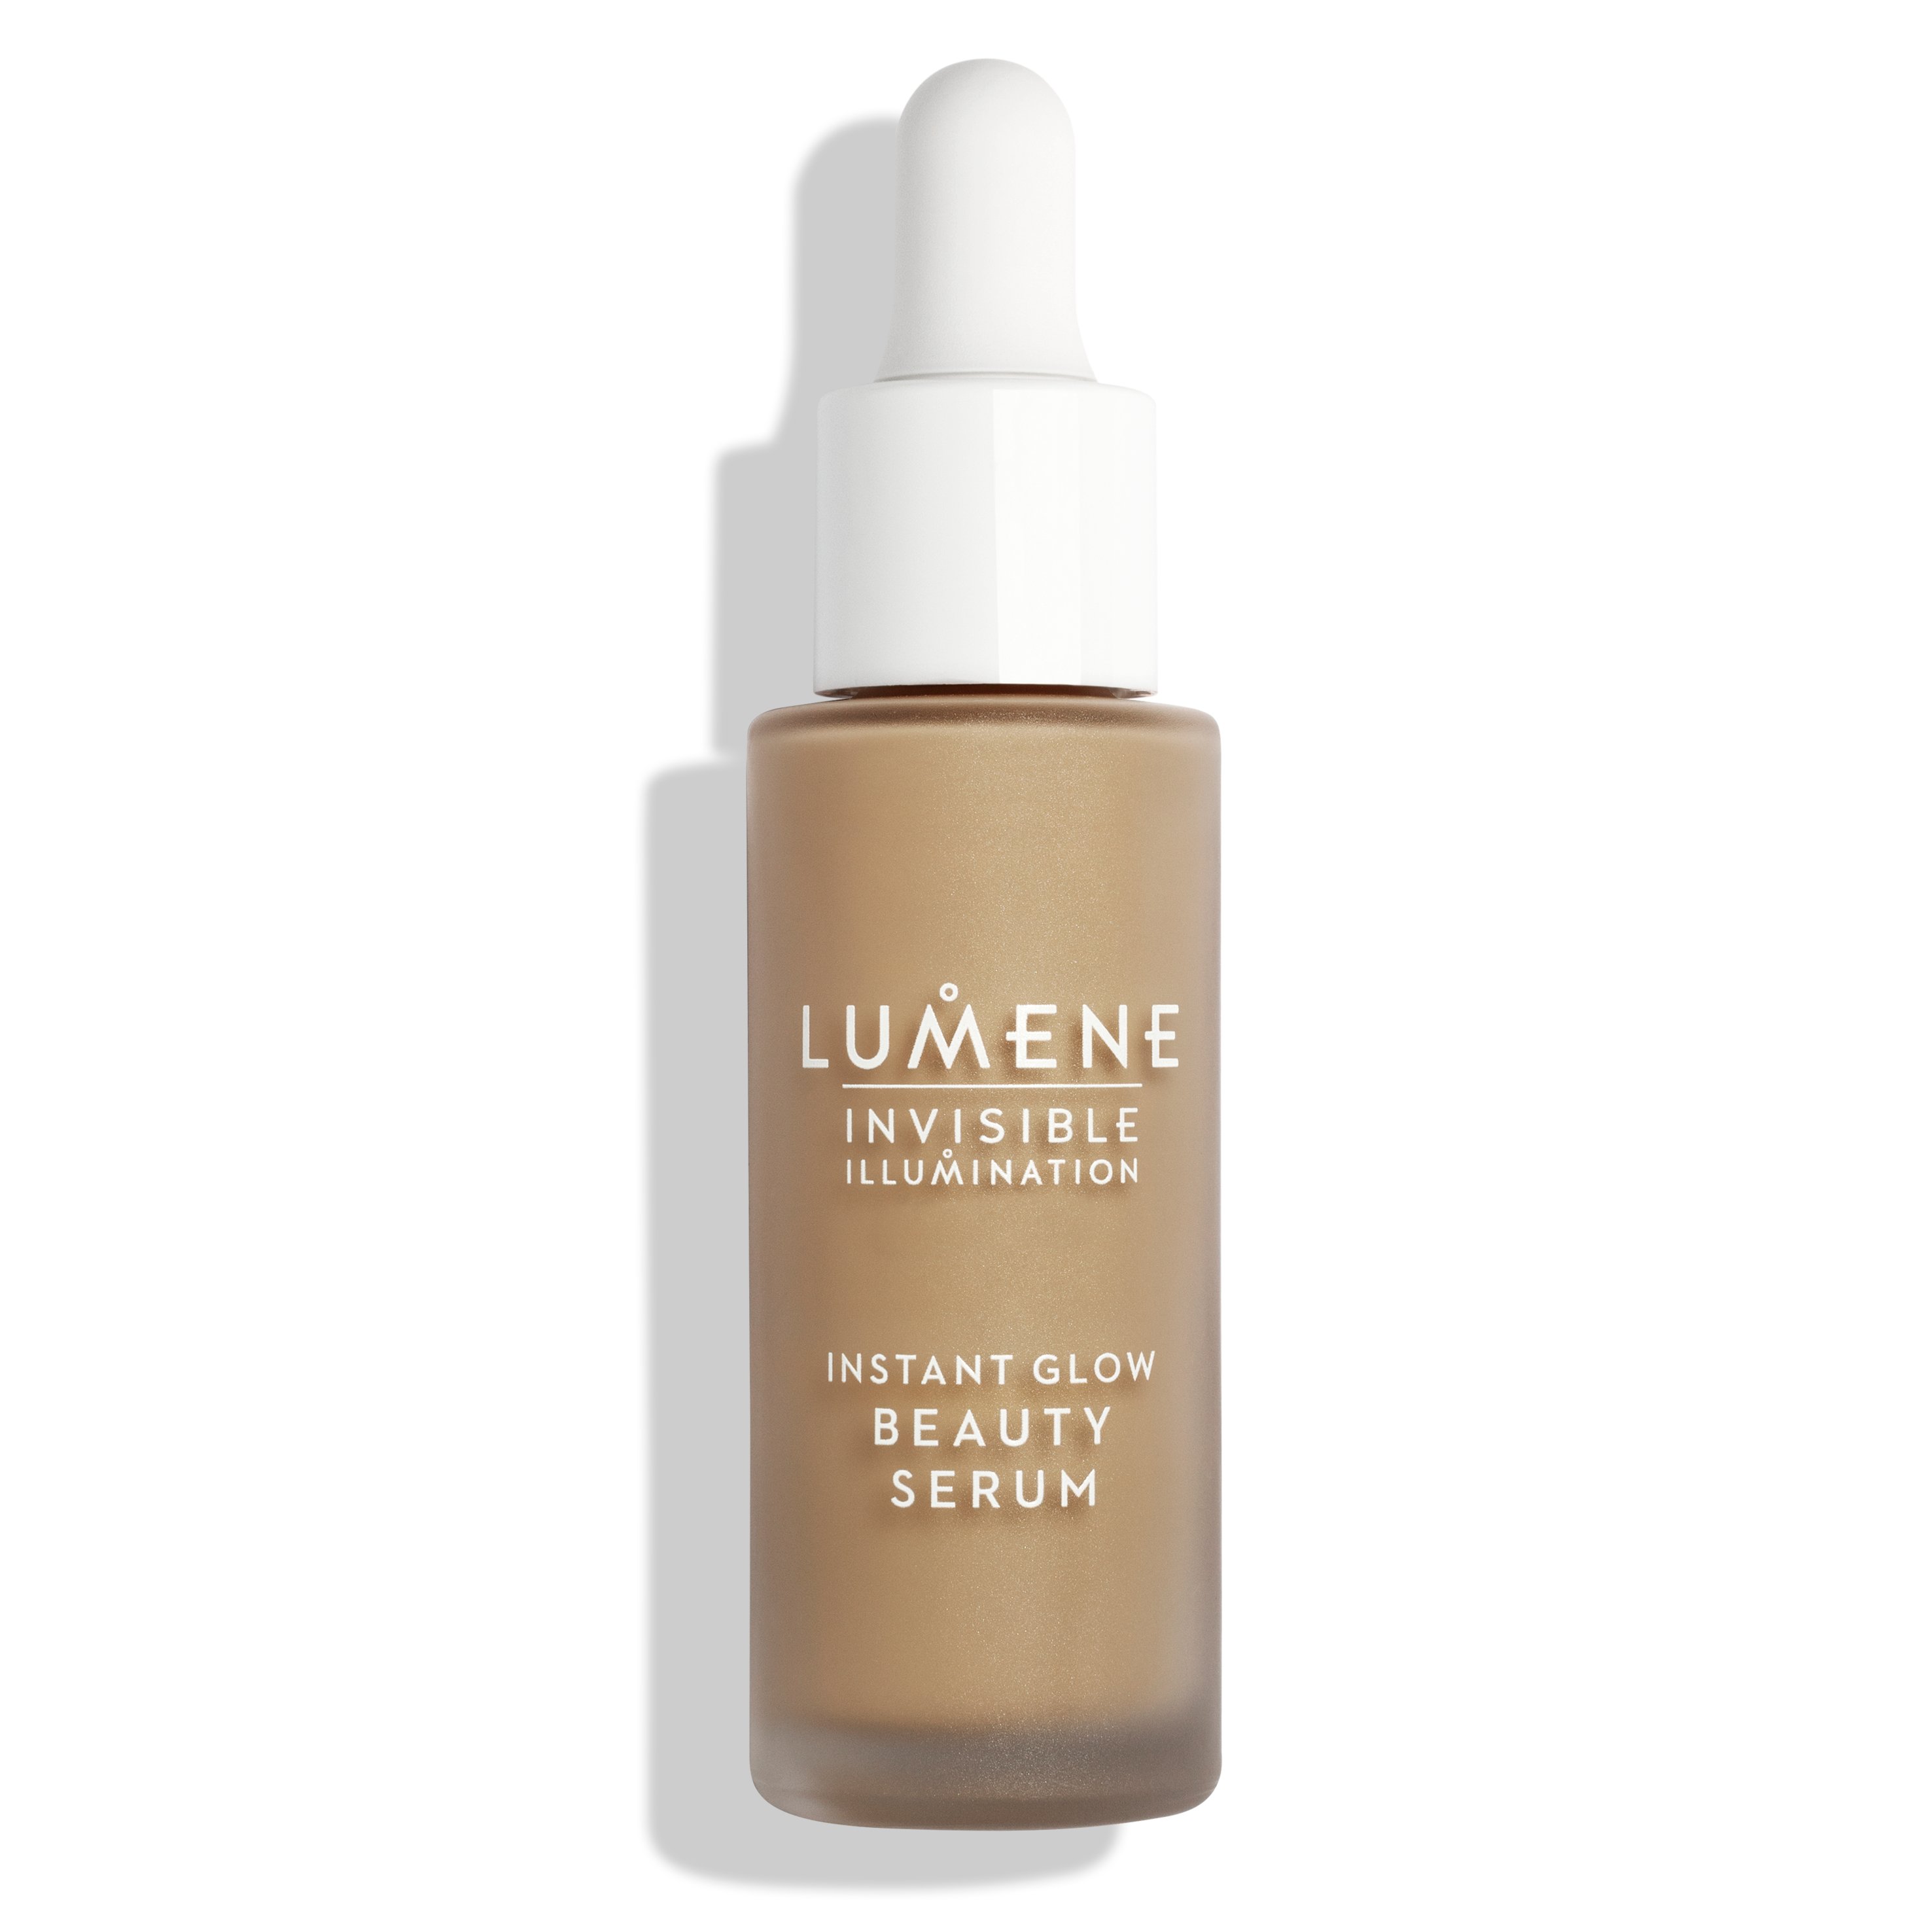 Lumene Invisible Illumination Instant Glow Beauty Serum, Universal Tan, 30 ml